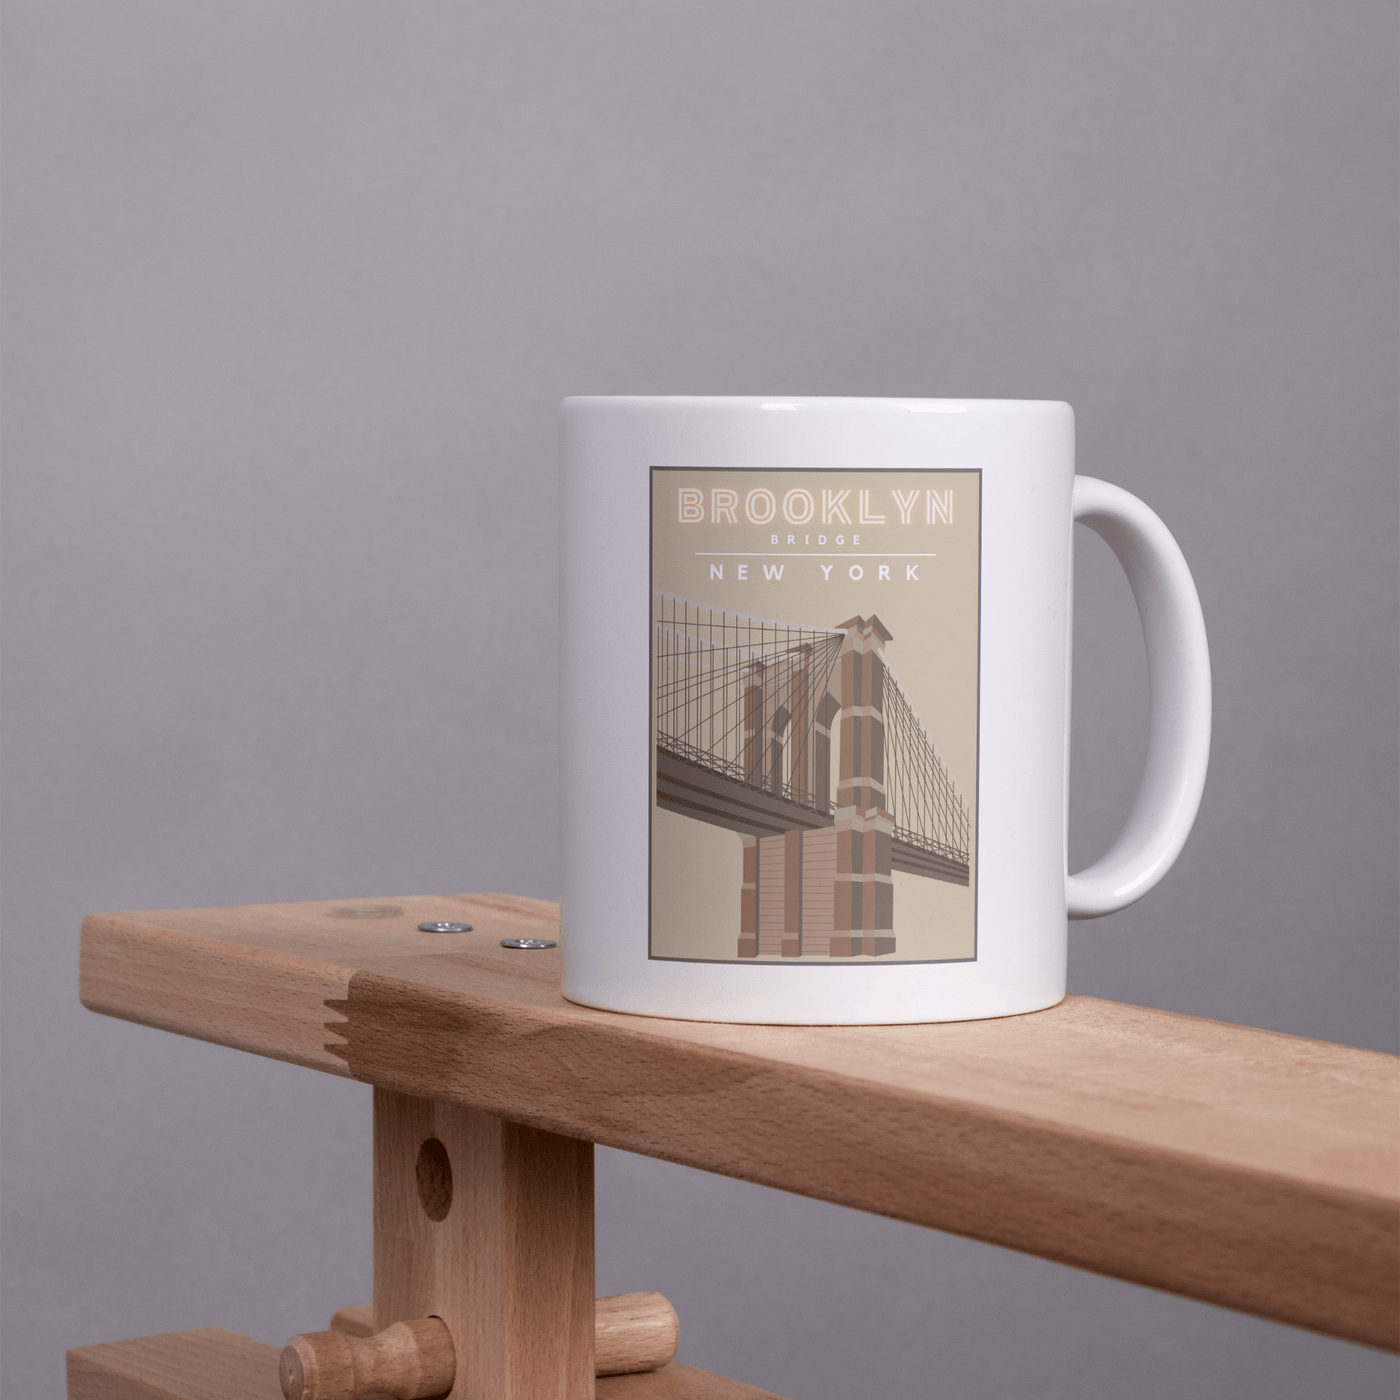 new york mug featuring the Brooklyn bridge